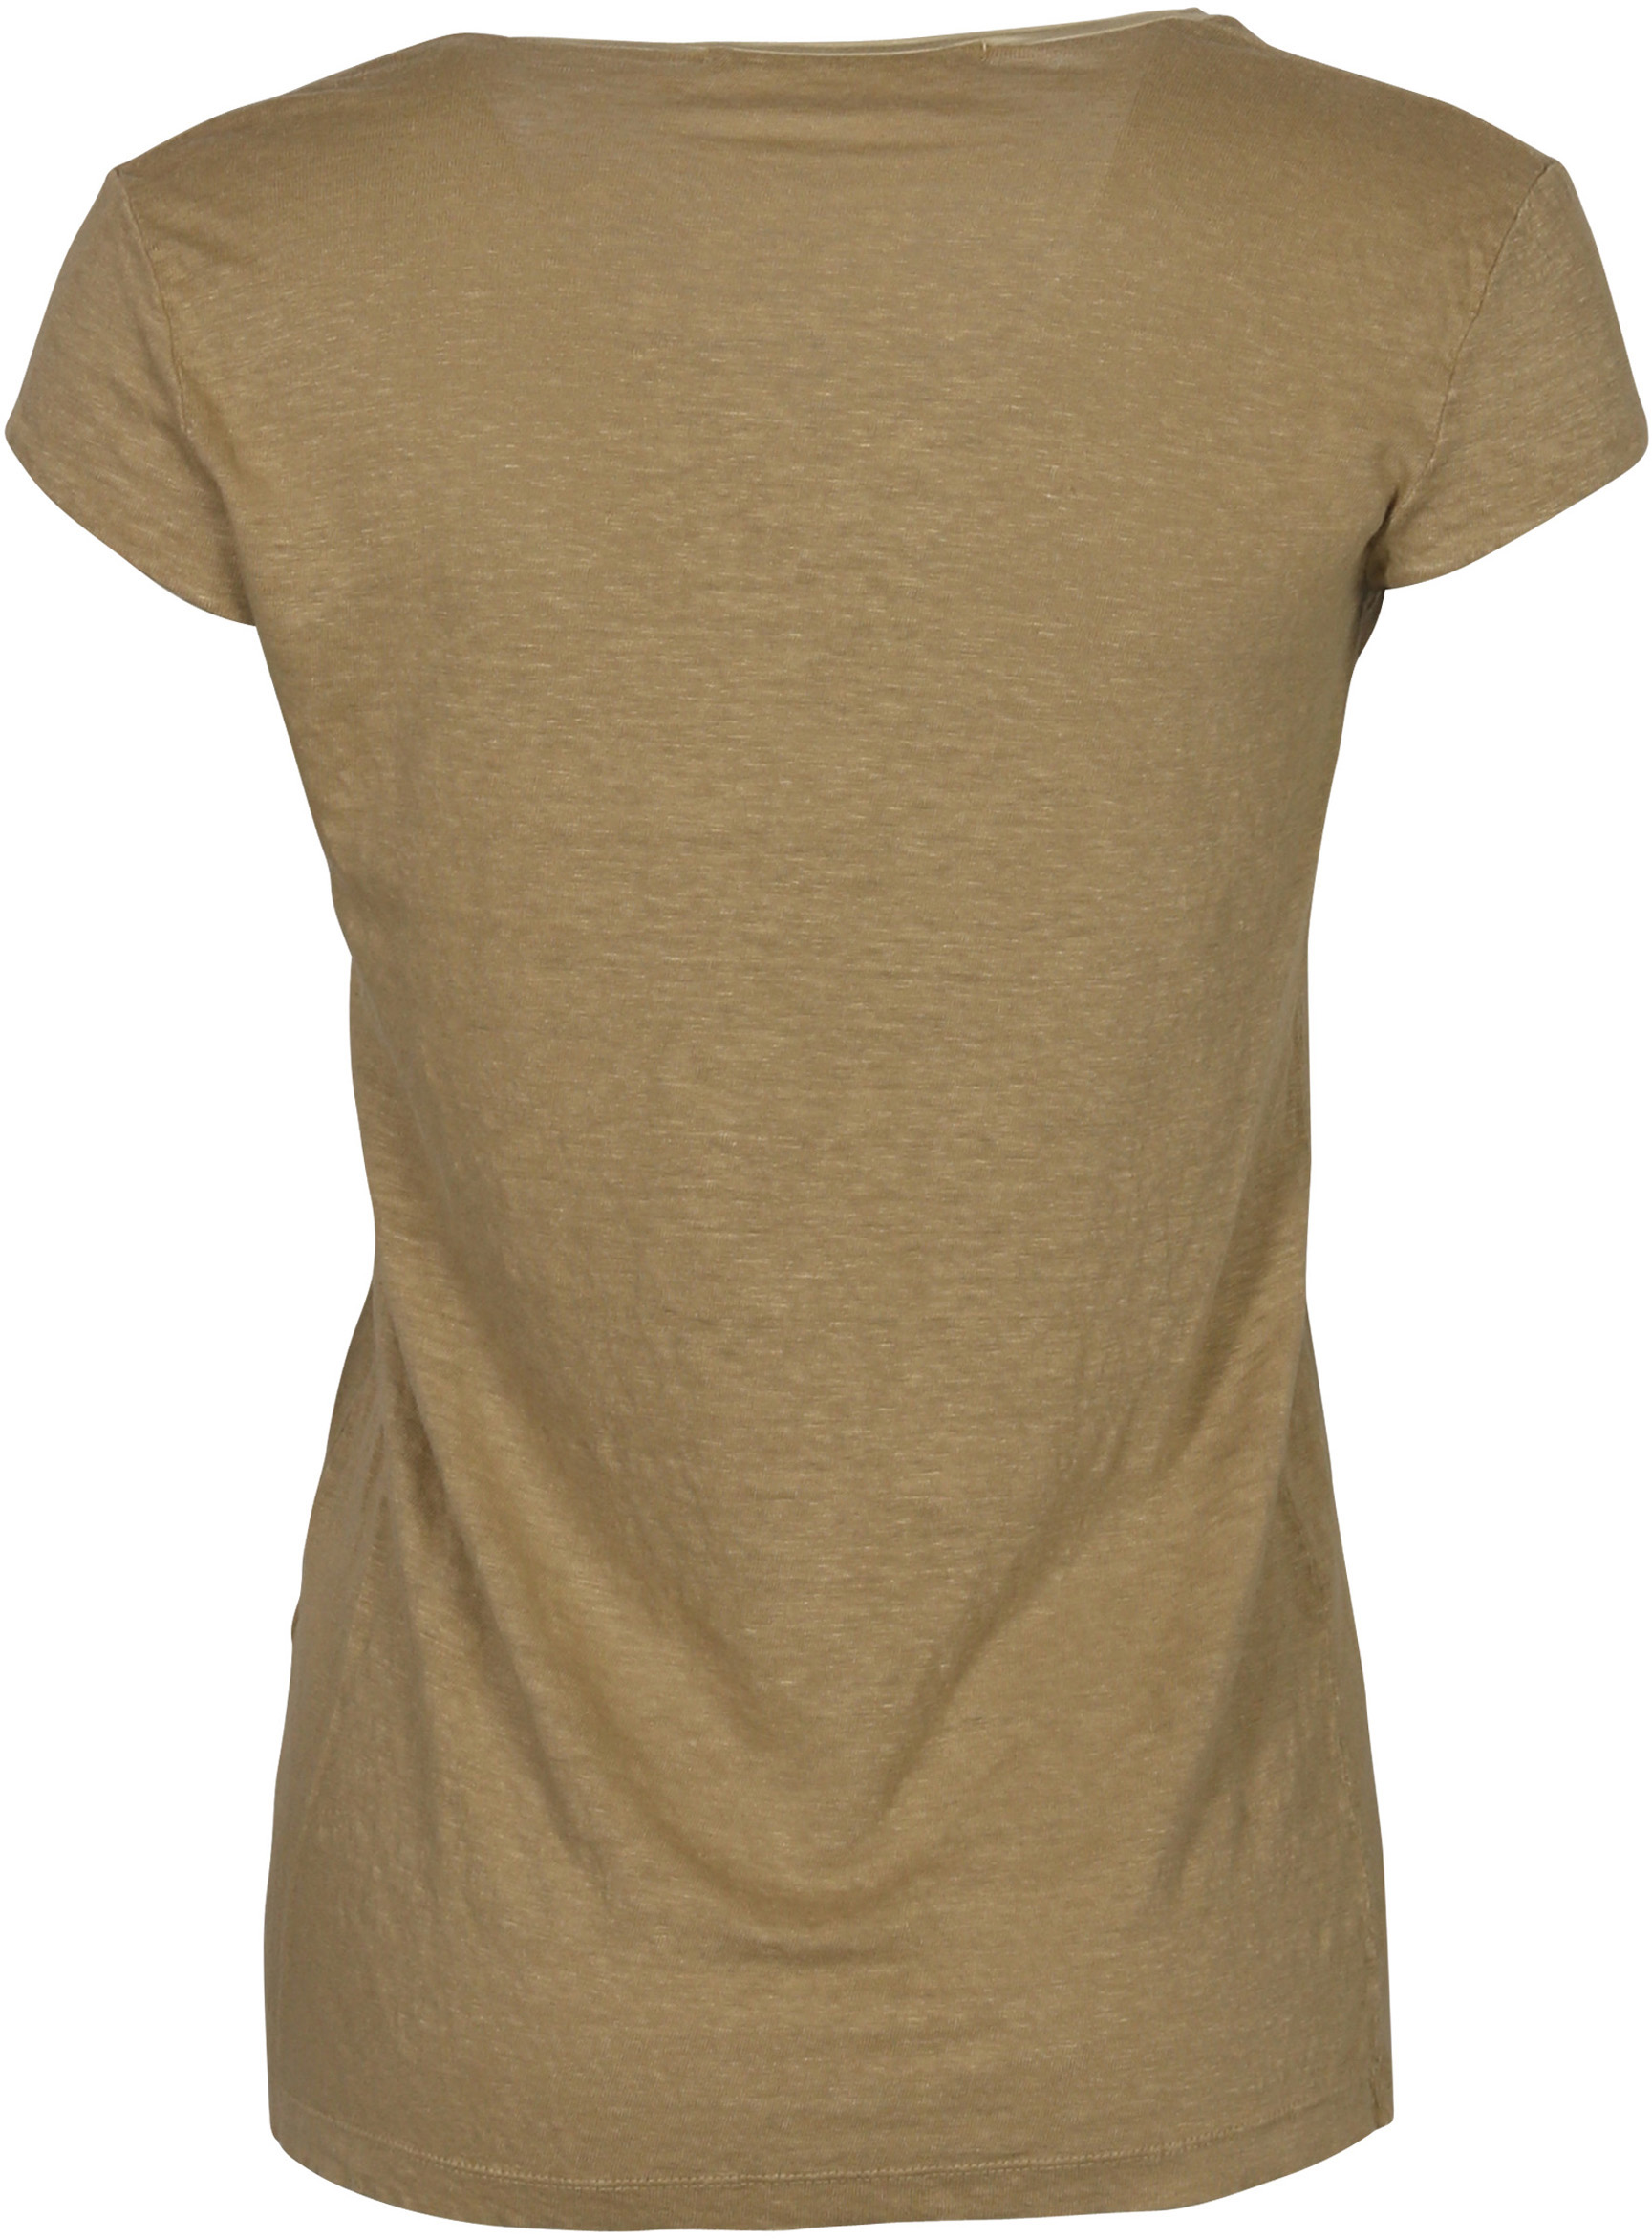 Transit T-Shirt Dark Brown Linen